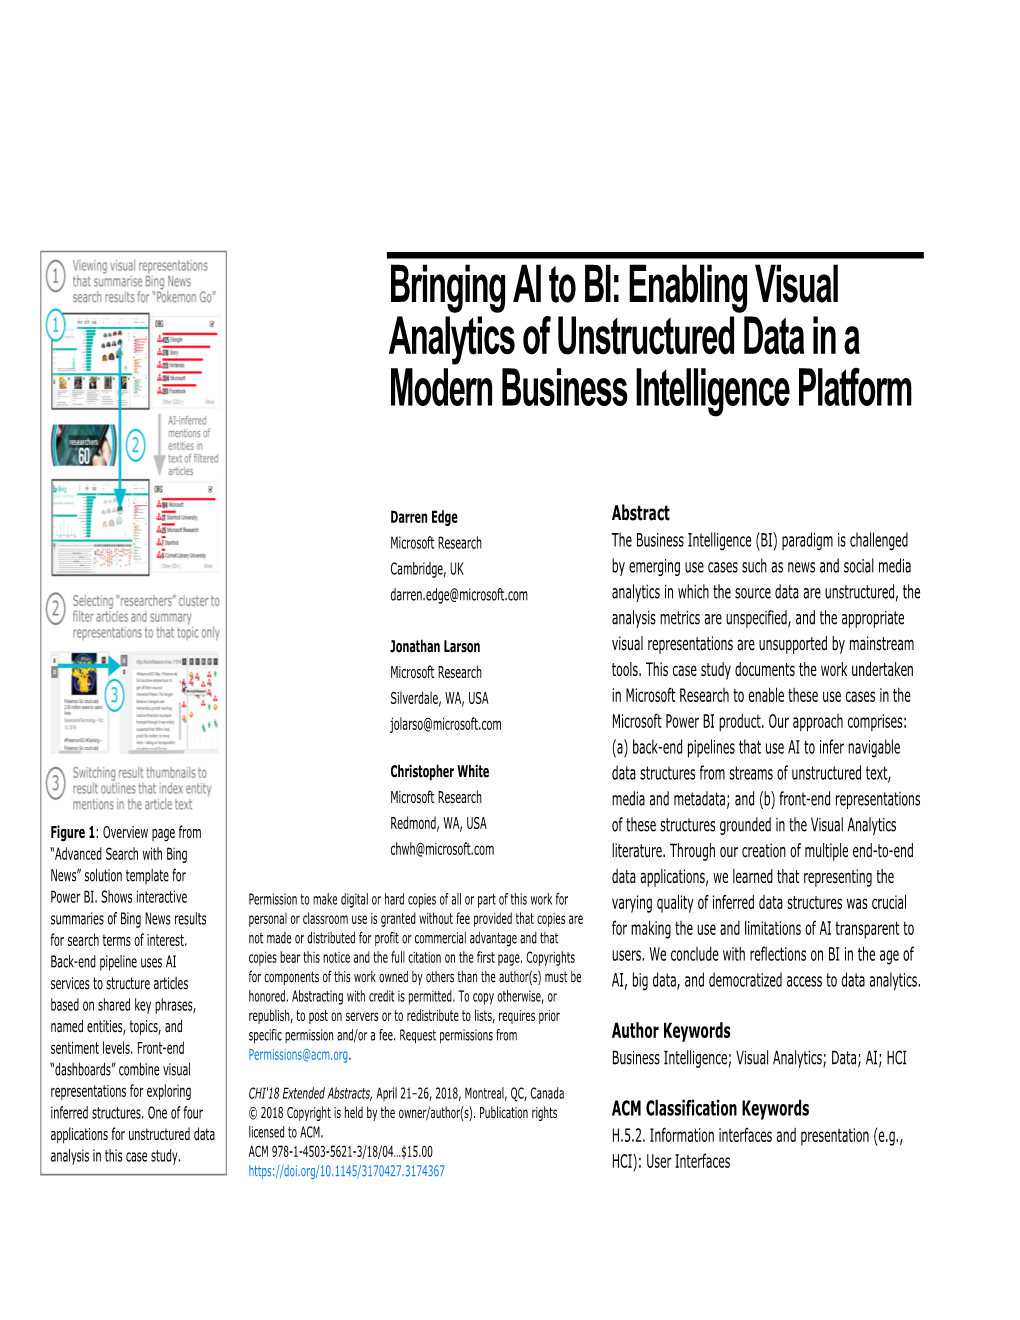 Bringing AI to BI: Enabling Visual Analytics of Unstructured